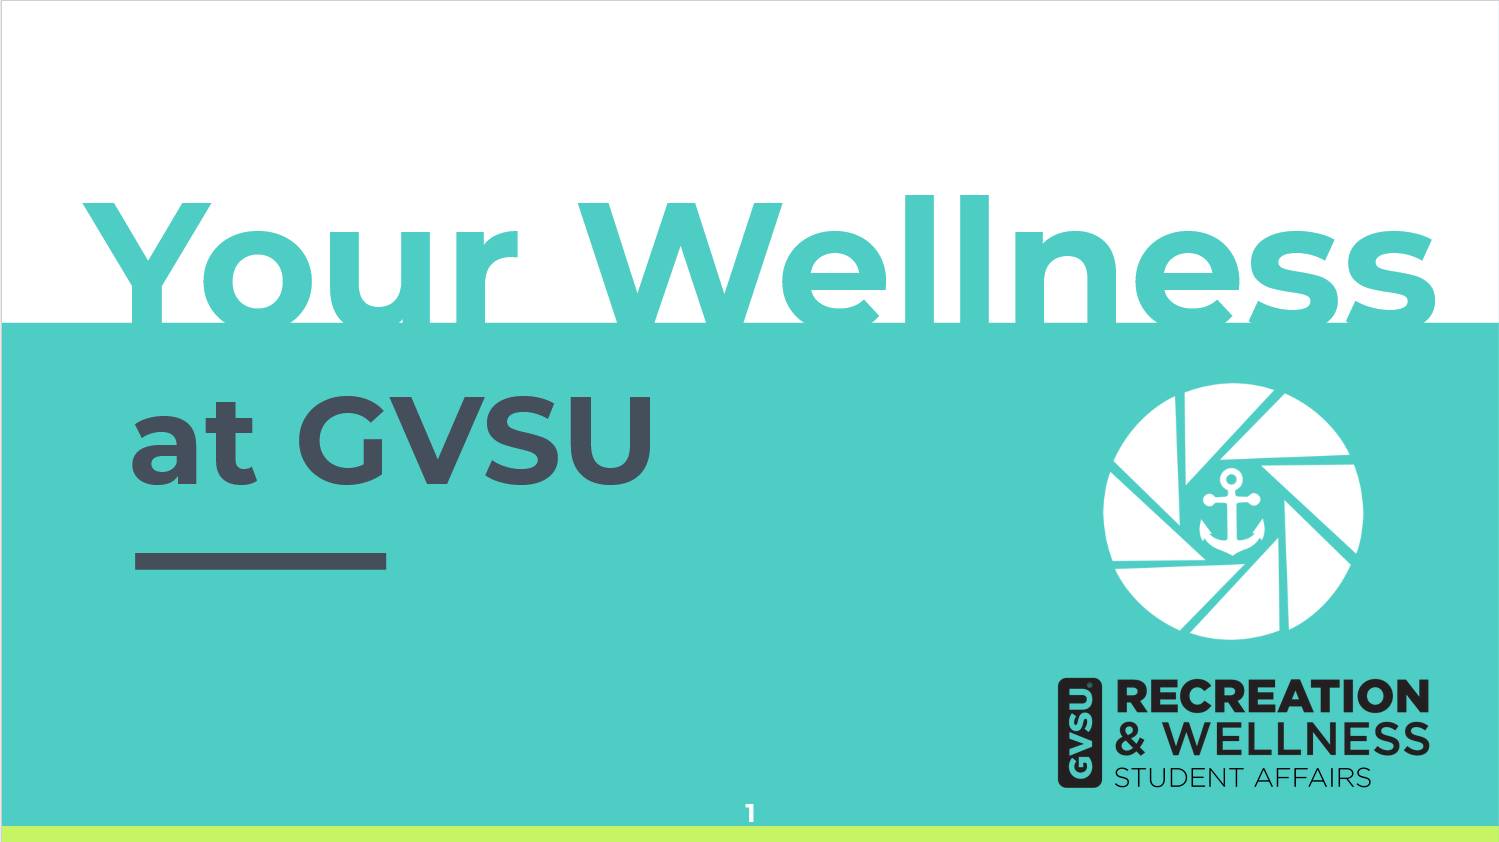 Your Wellness at GVSU